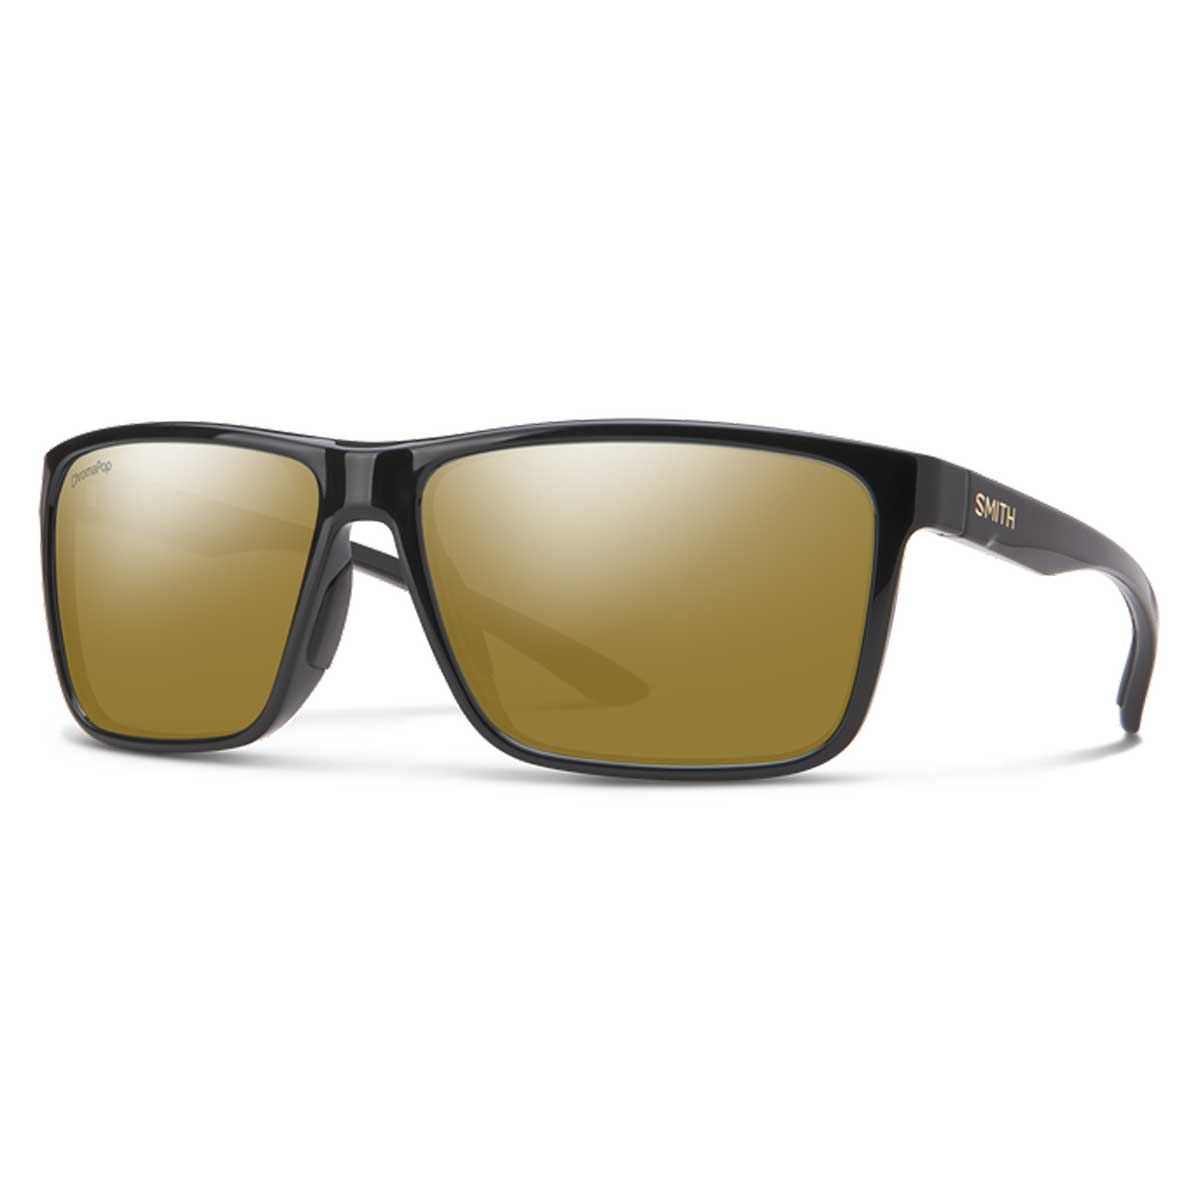 Riptide Sunglasses Chromapop Polarized in Black with Bronze Mirror